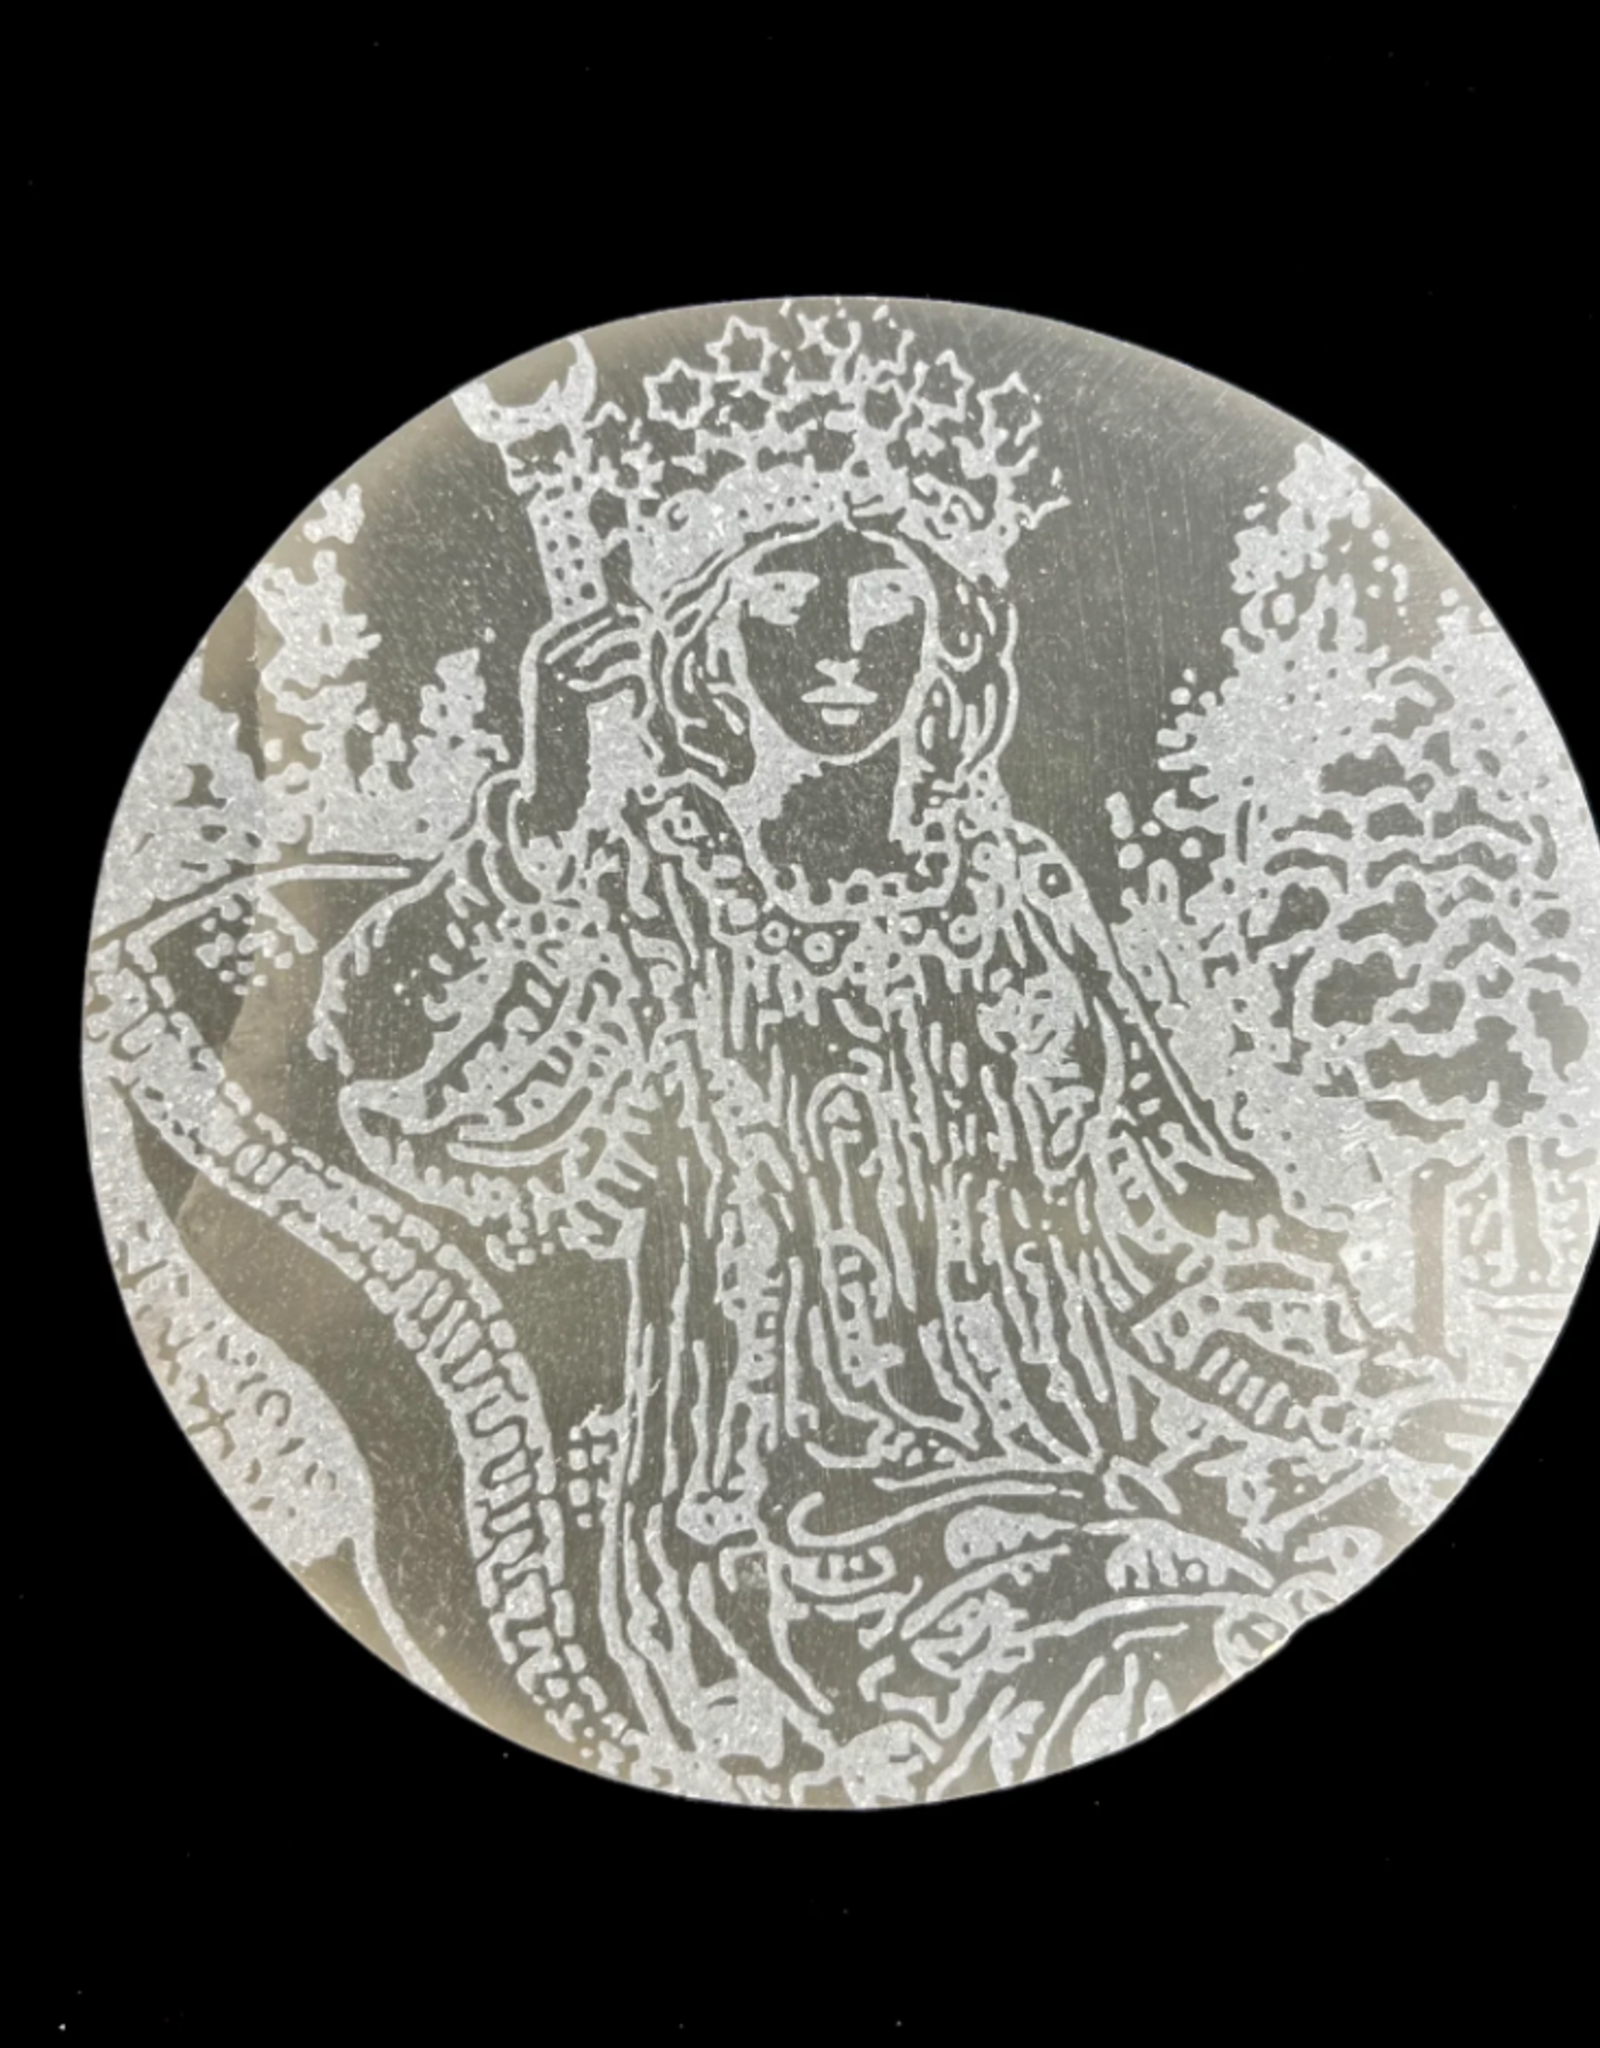 Pelham Grayson Major Arcana Etched | Selenite Crystal Charging Plate | 9-10 cm | High Priestess